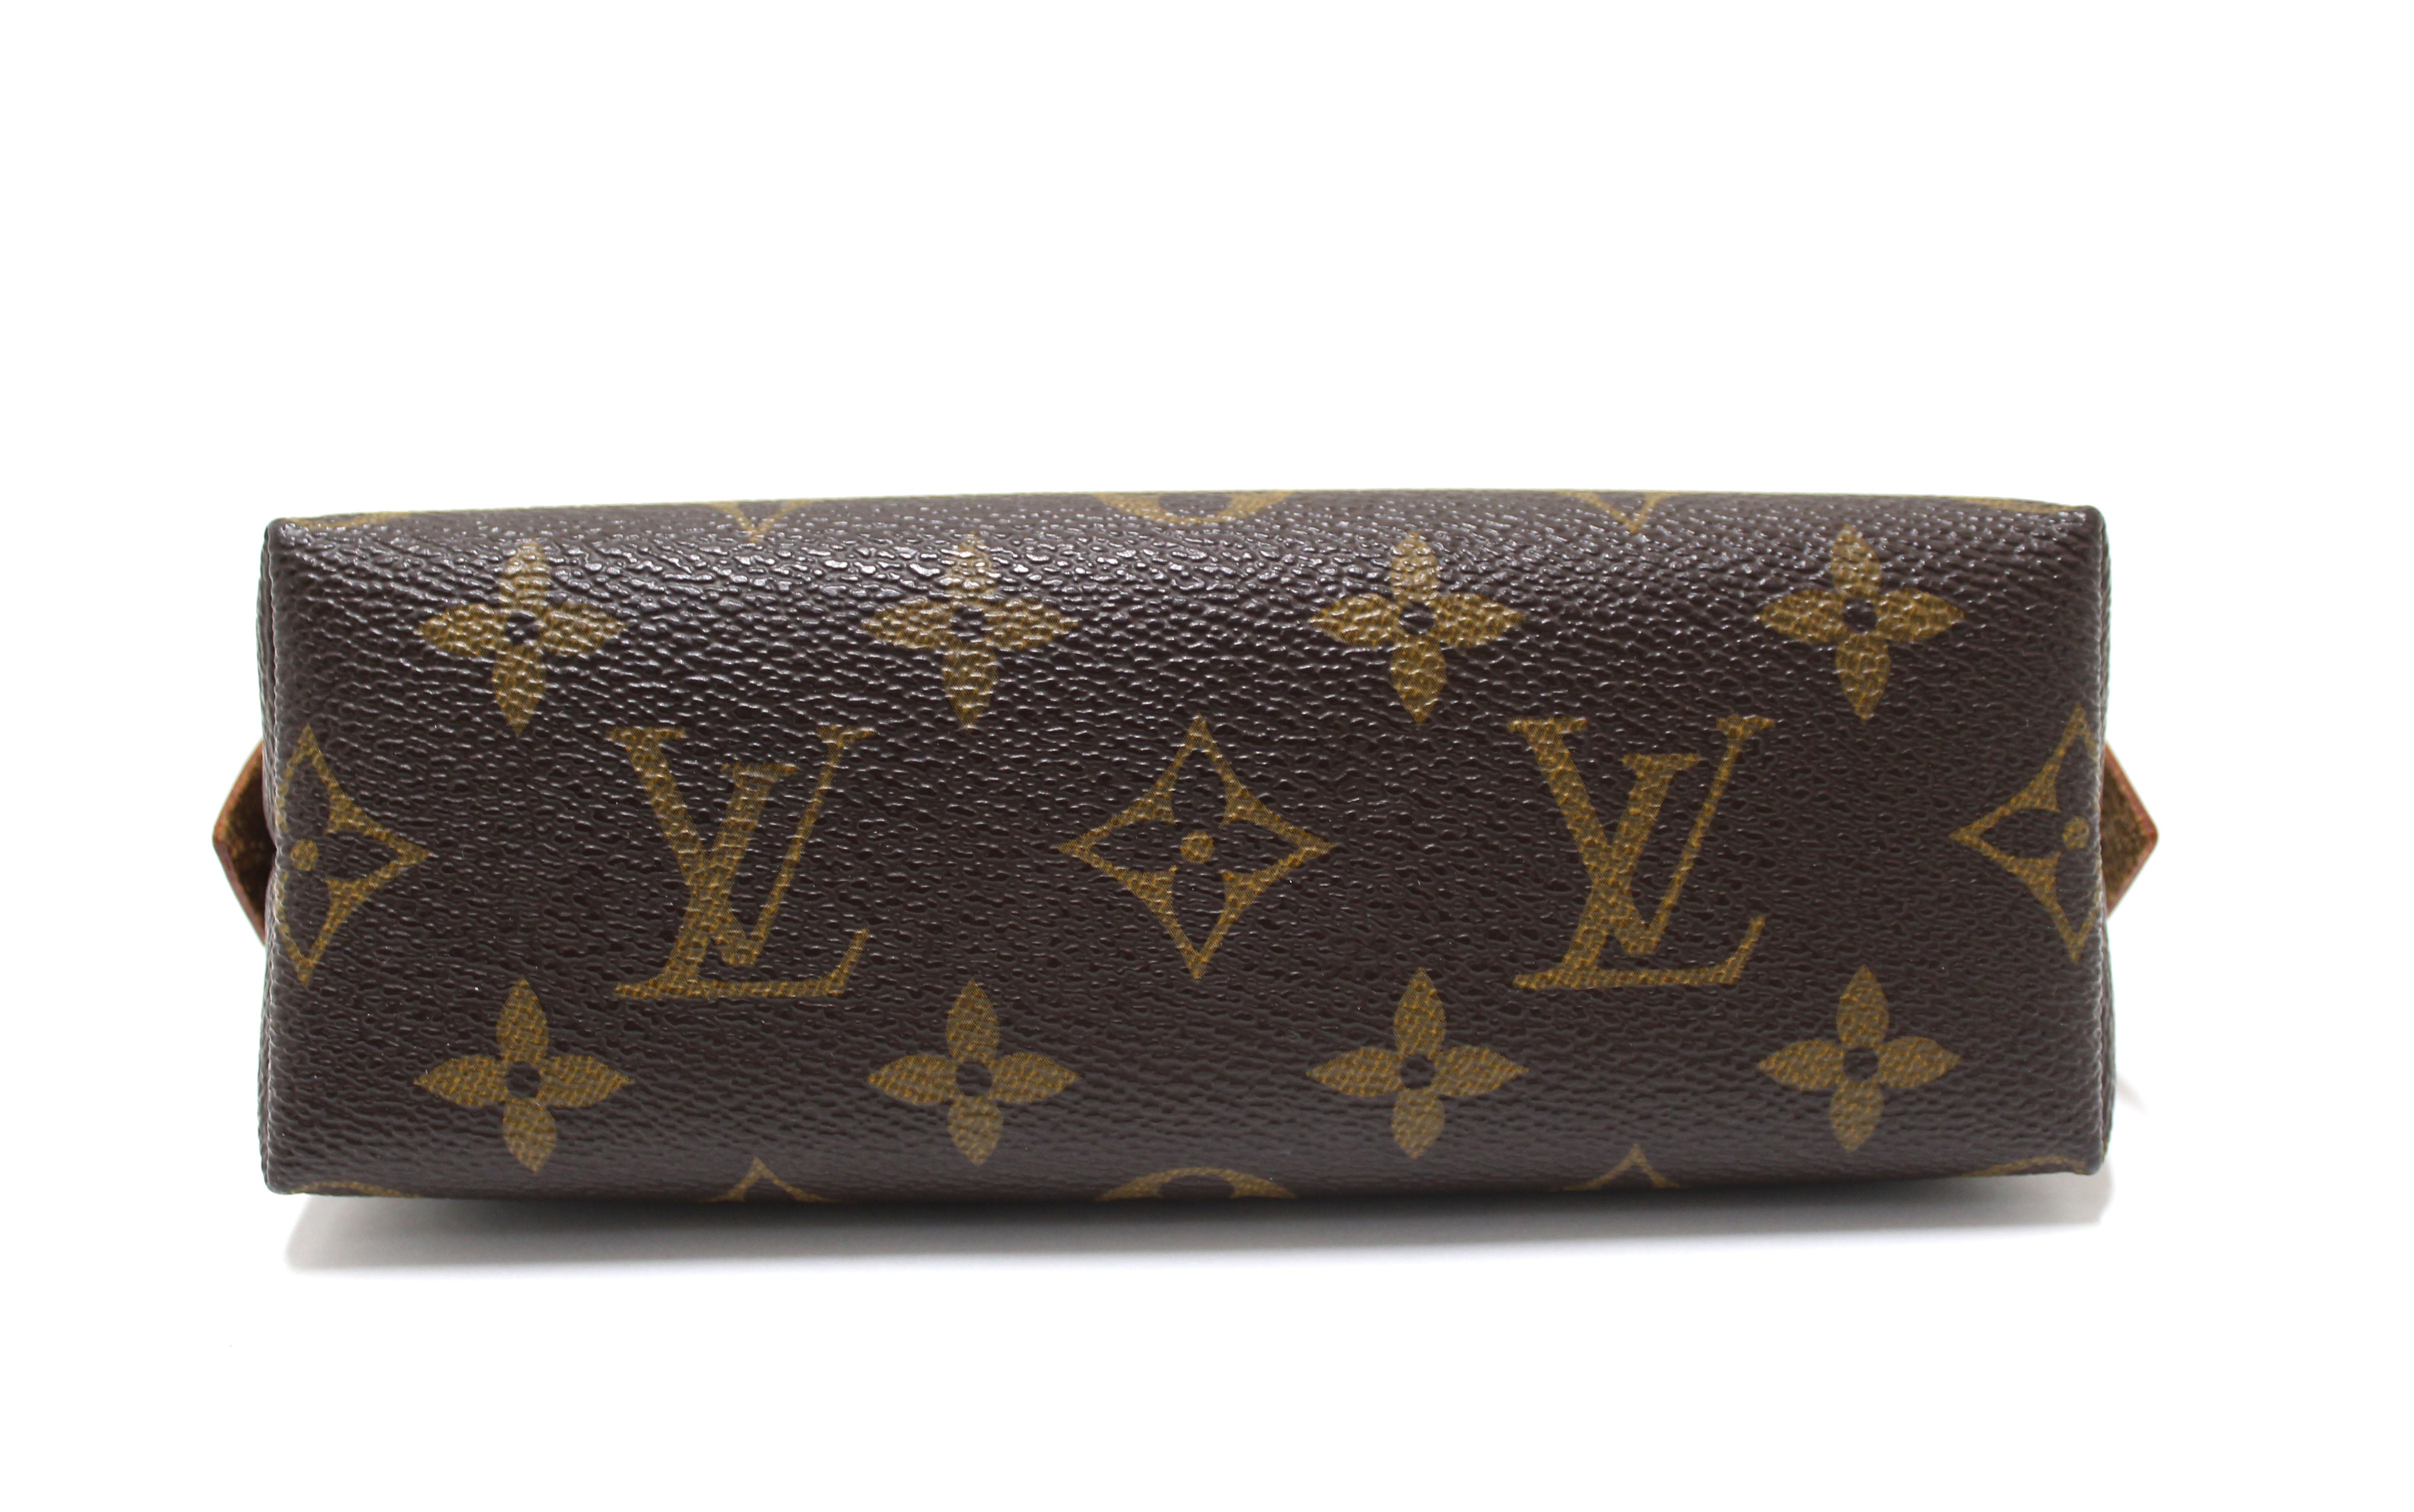 Authentic Louis Vuitton Monogram Cosmetic Pouch